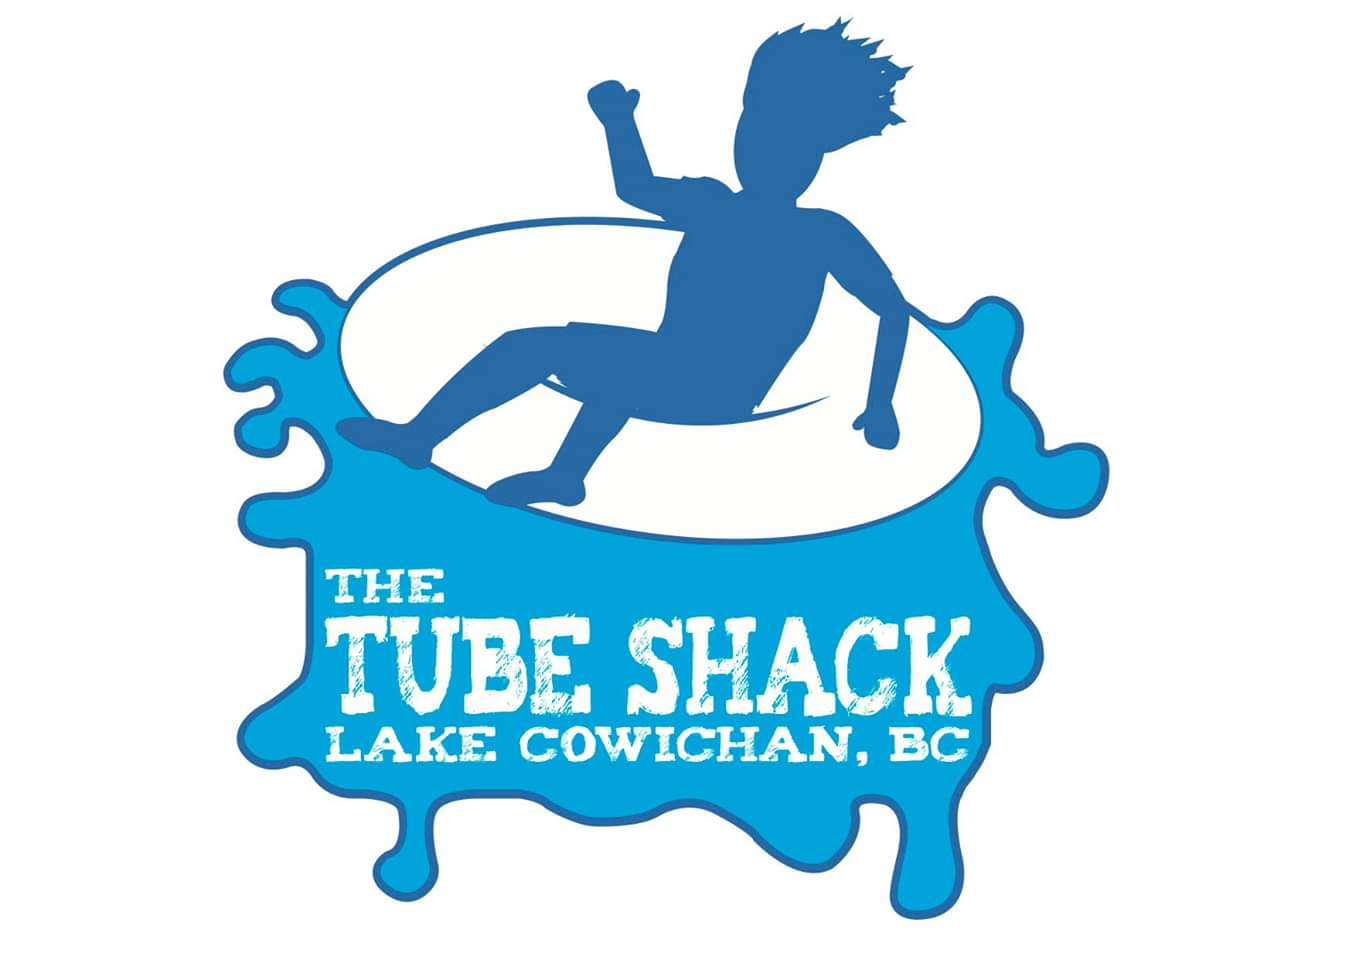 Cowichan River Tubing - The Tube Shack